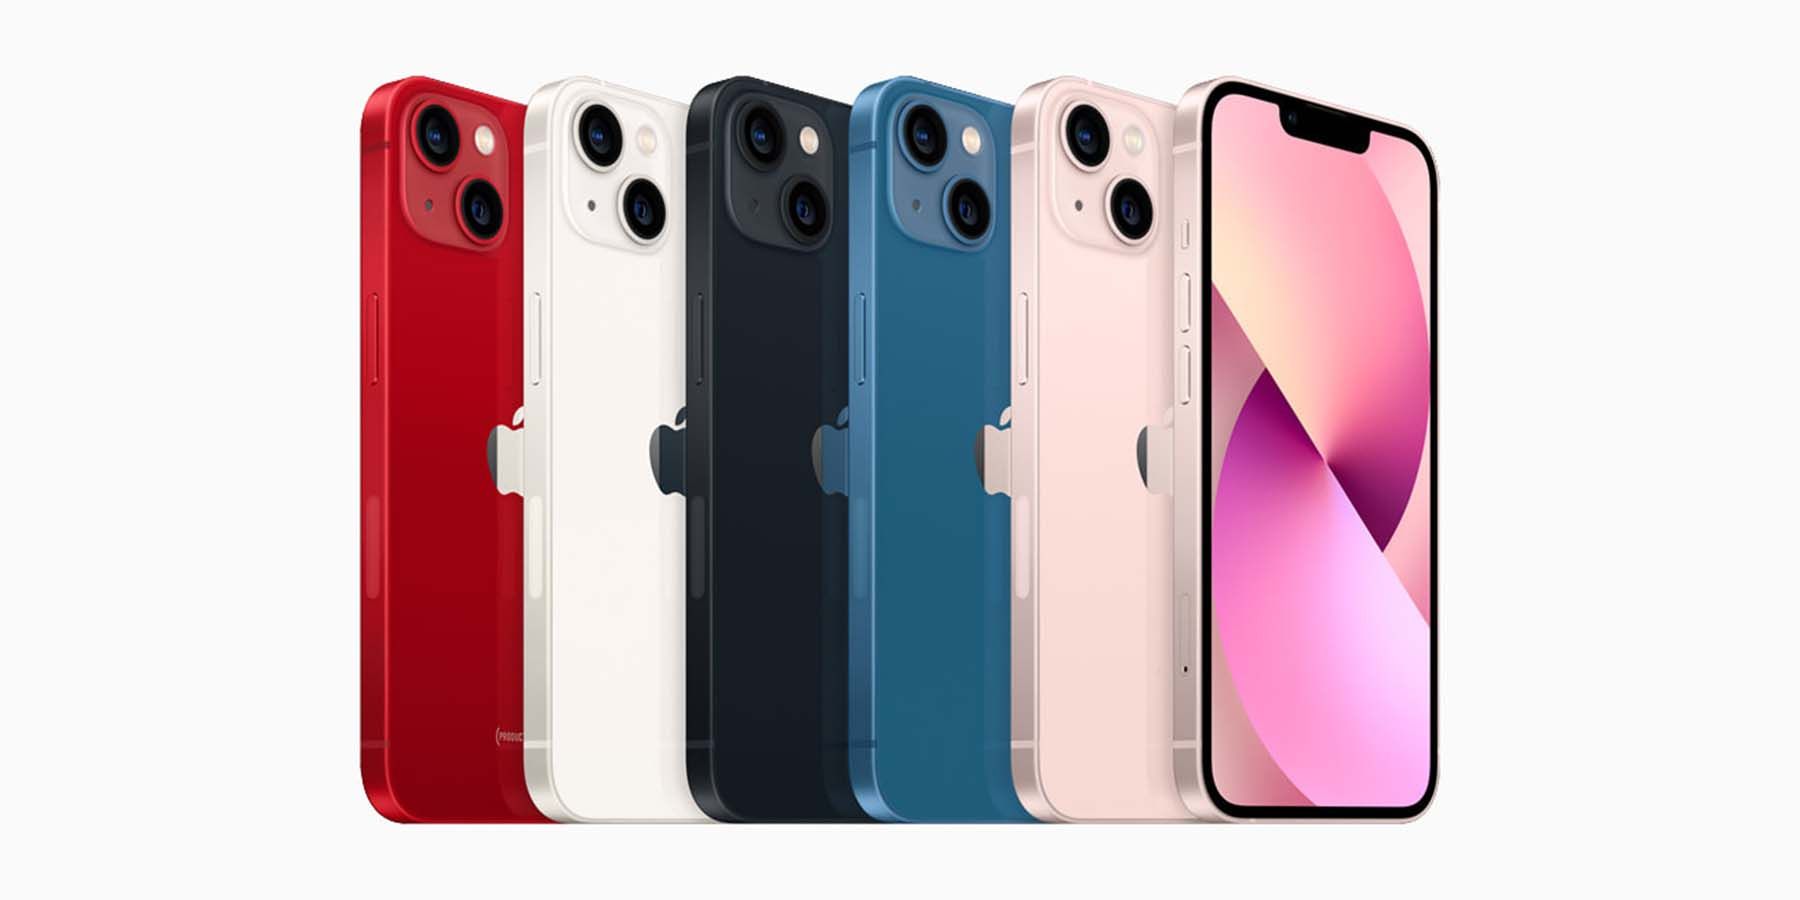 iphone 12 invert colors display